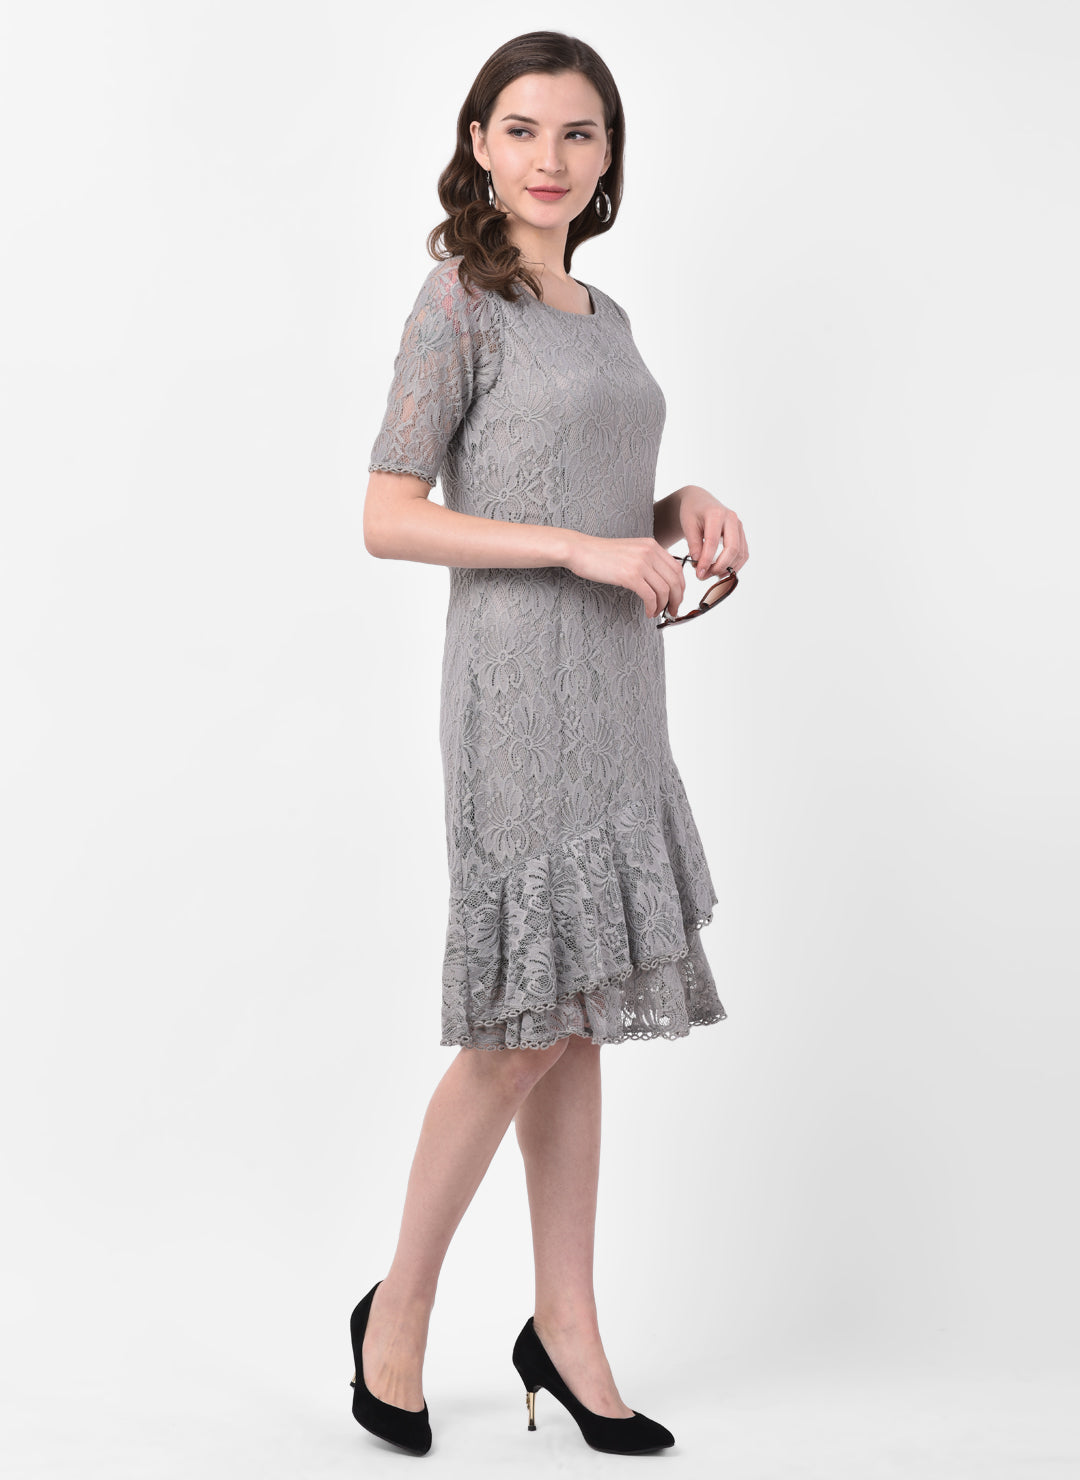 Grey Half Sleeve A-Line Dress